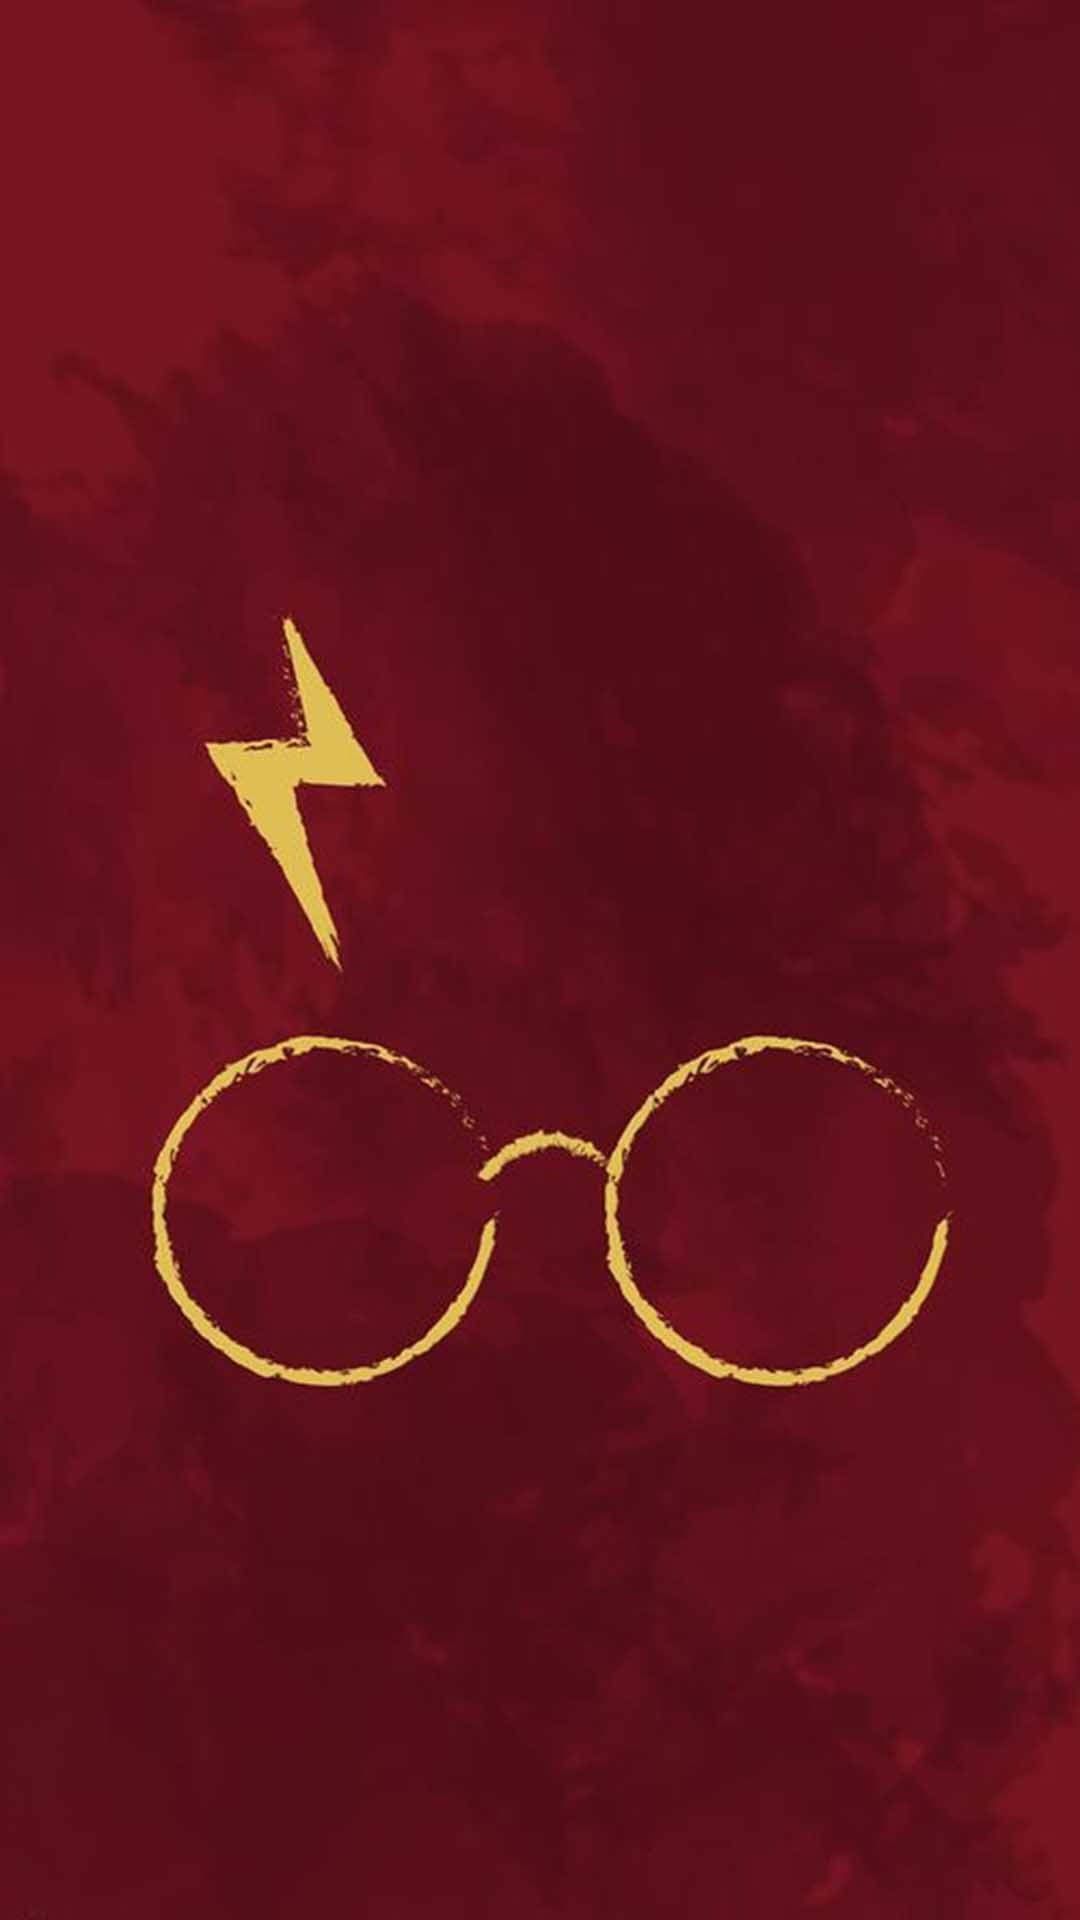 Free Hogwarts Wallpaper Downloads, Hogwarts Wallpaper for FREE